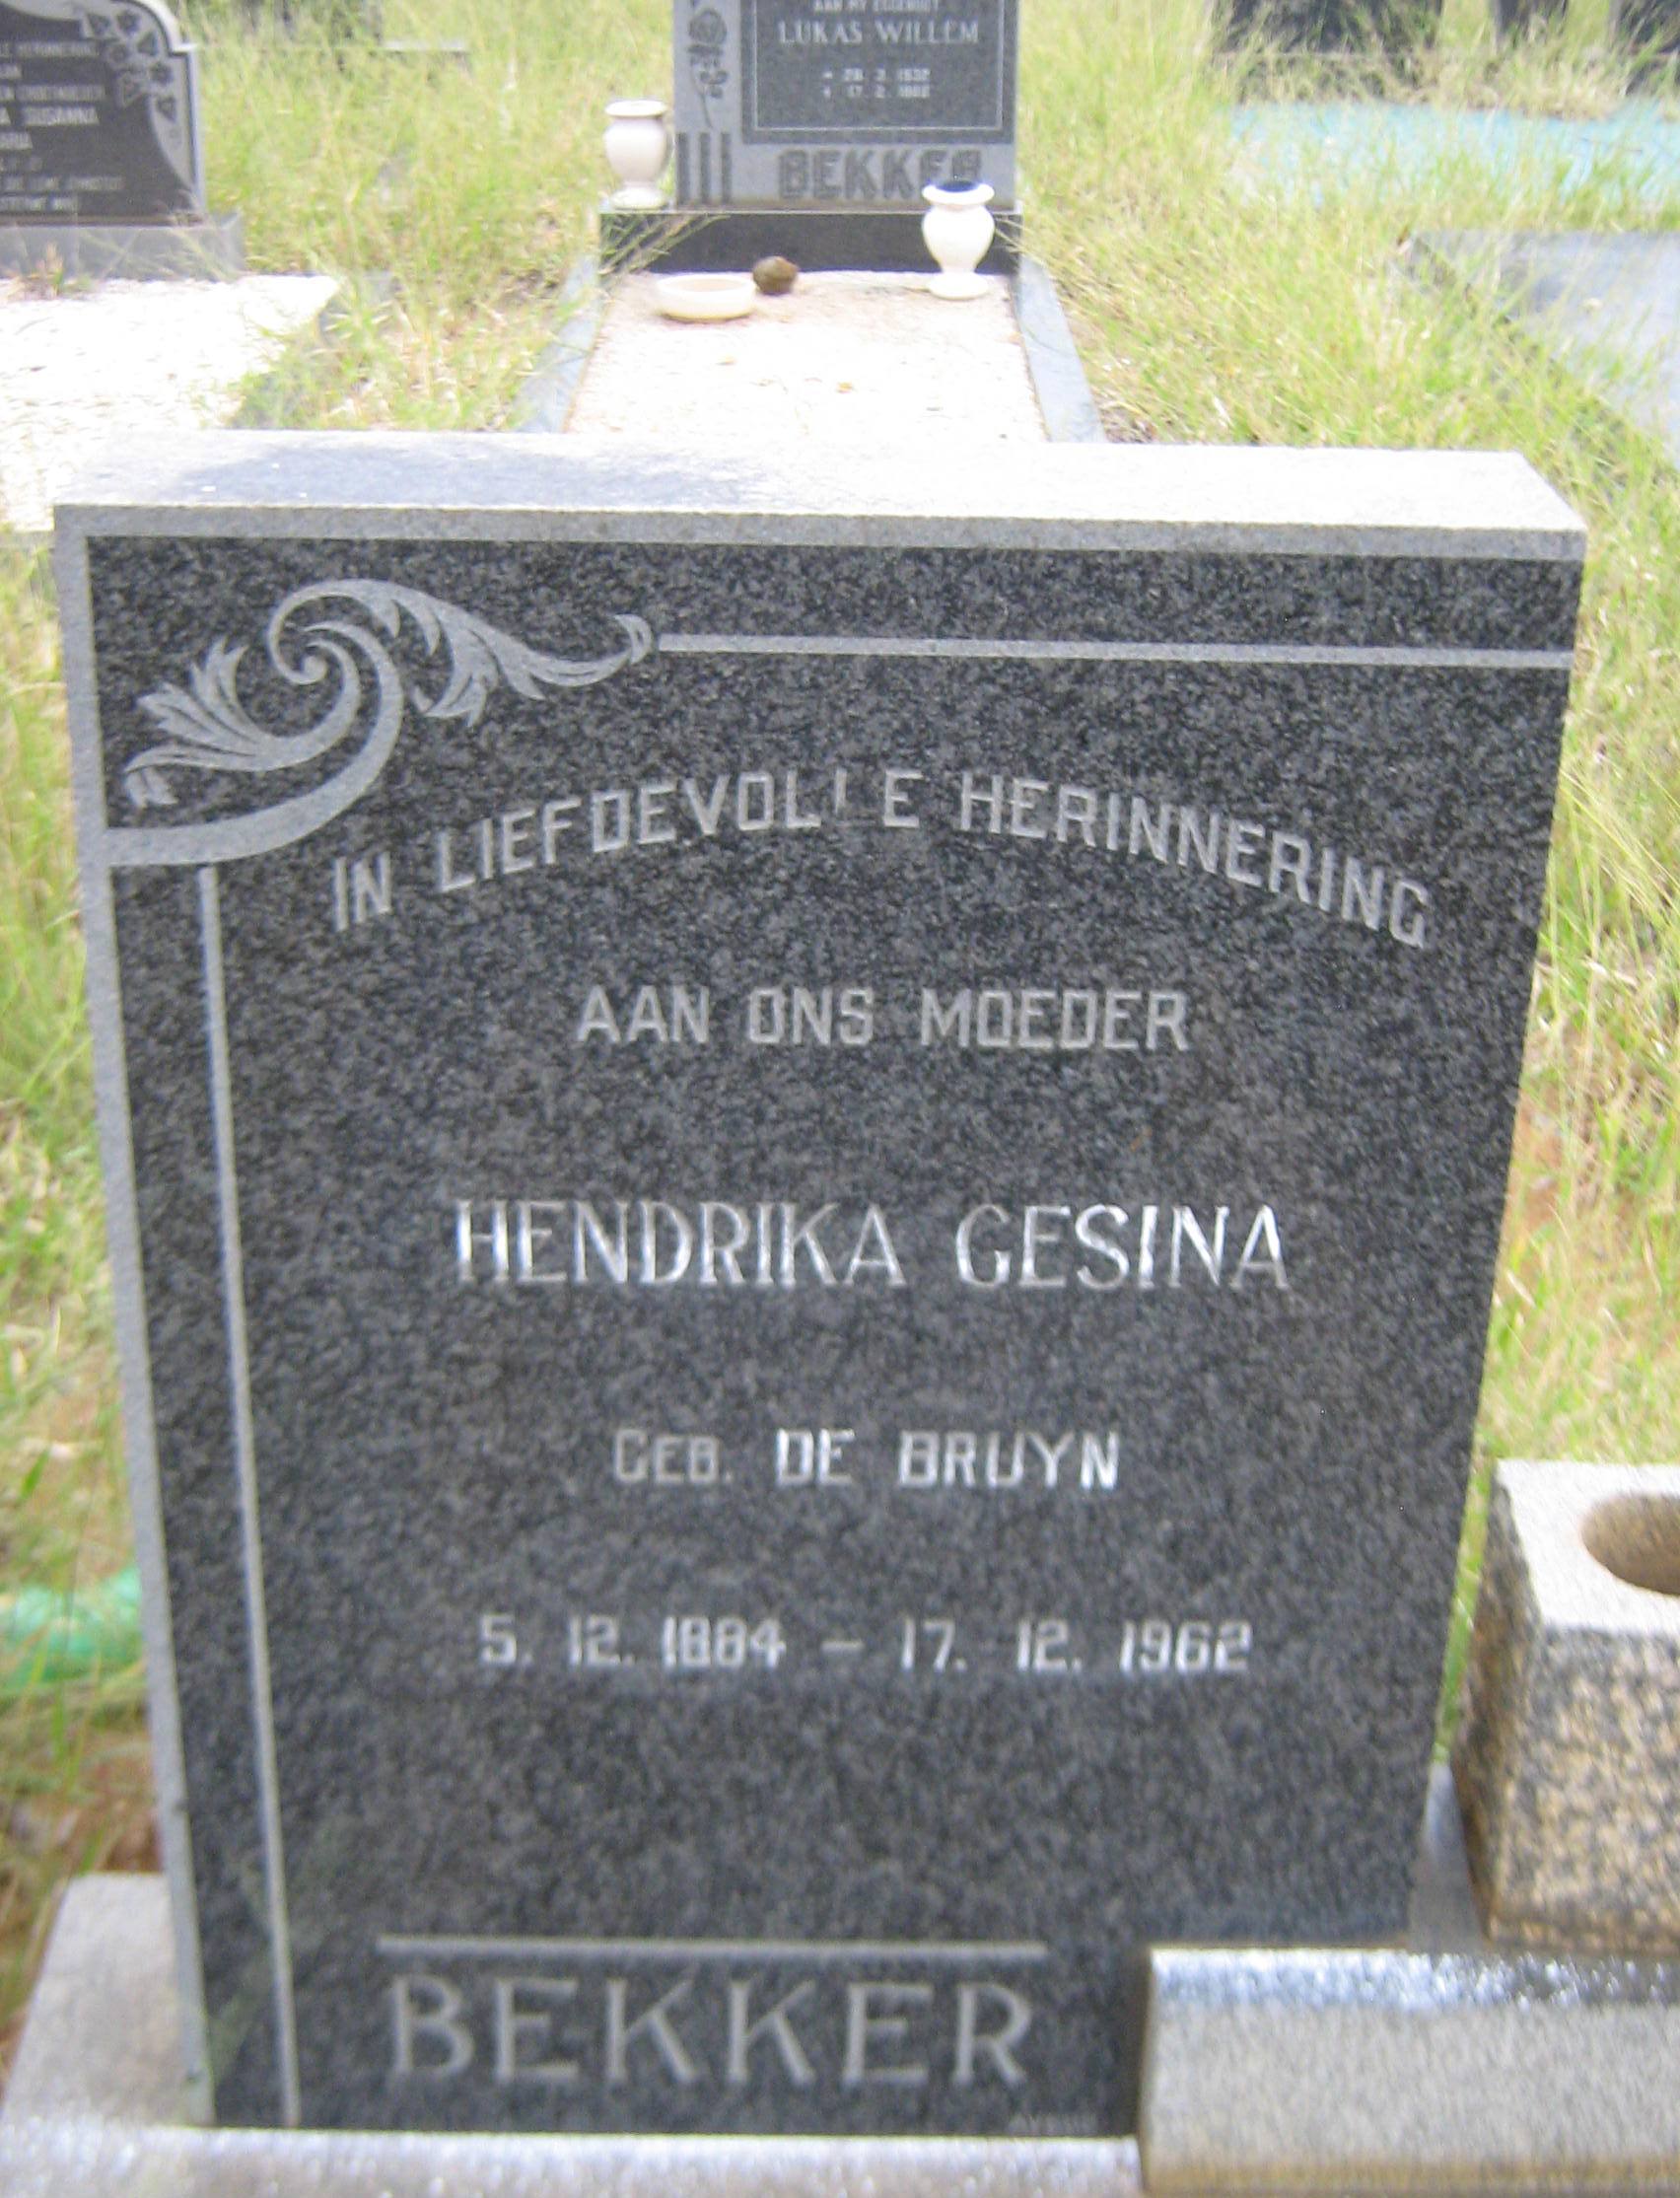 BEKKER Hendrika Gesina nee DE BRUYN 1884-1962